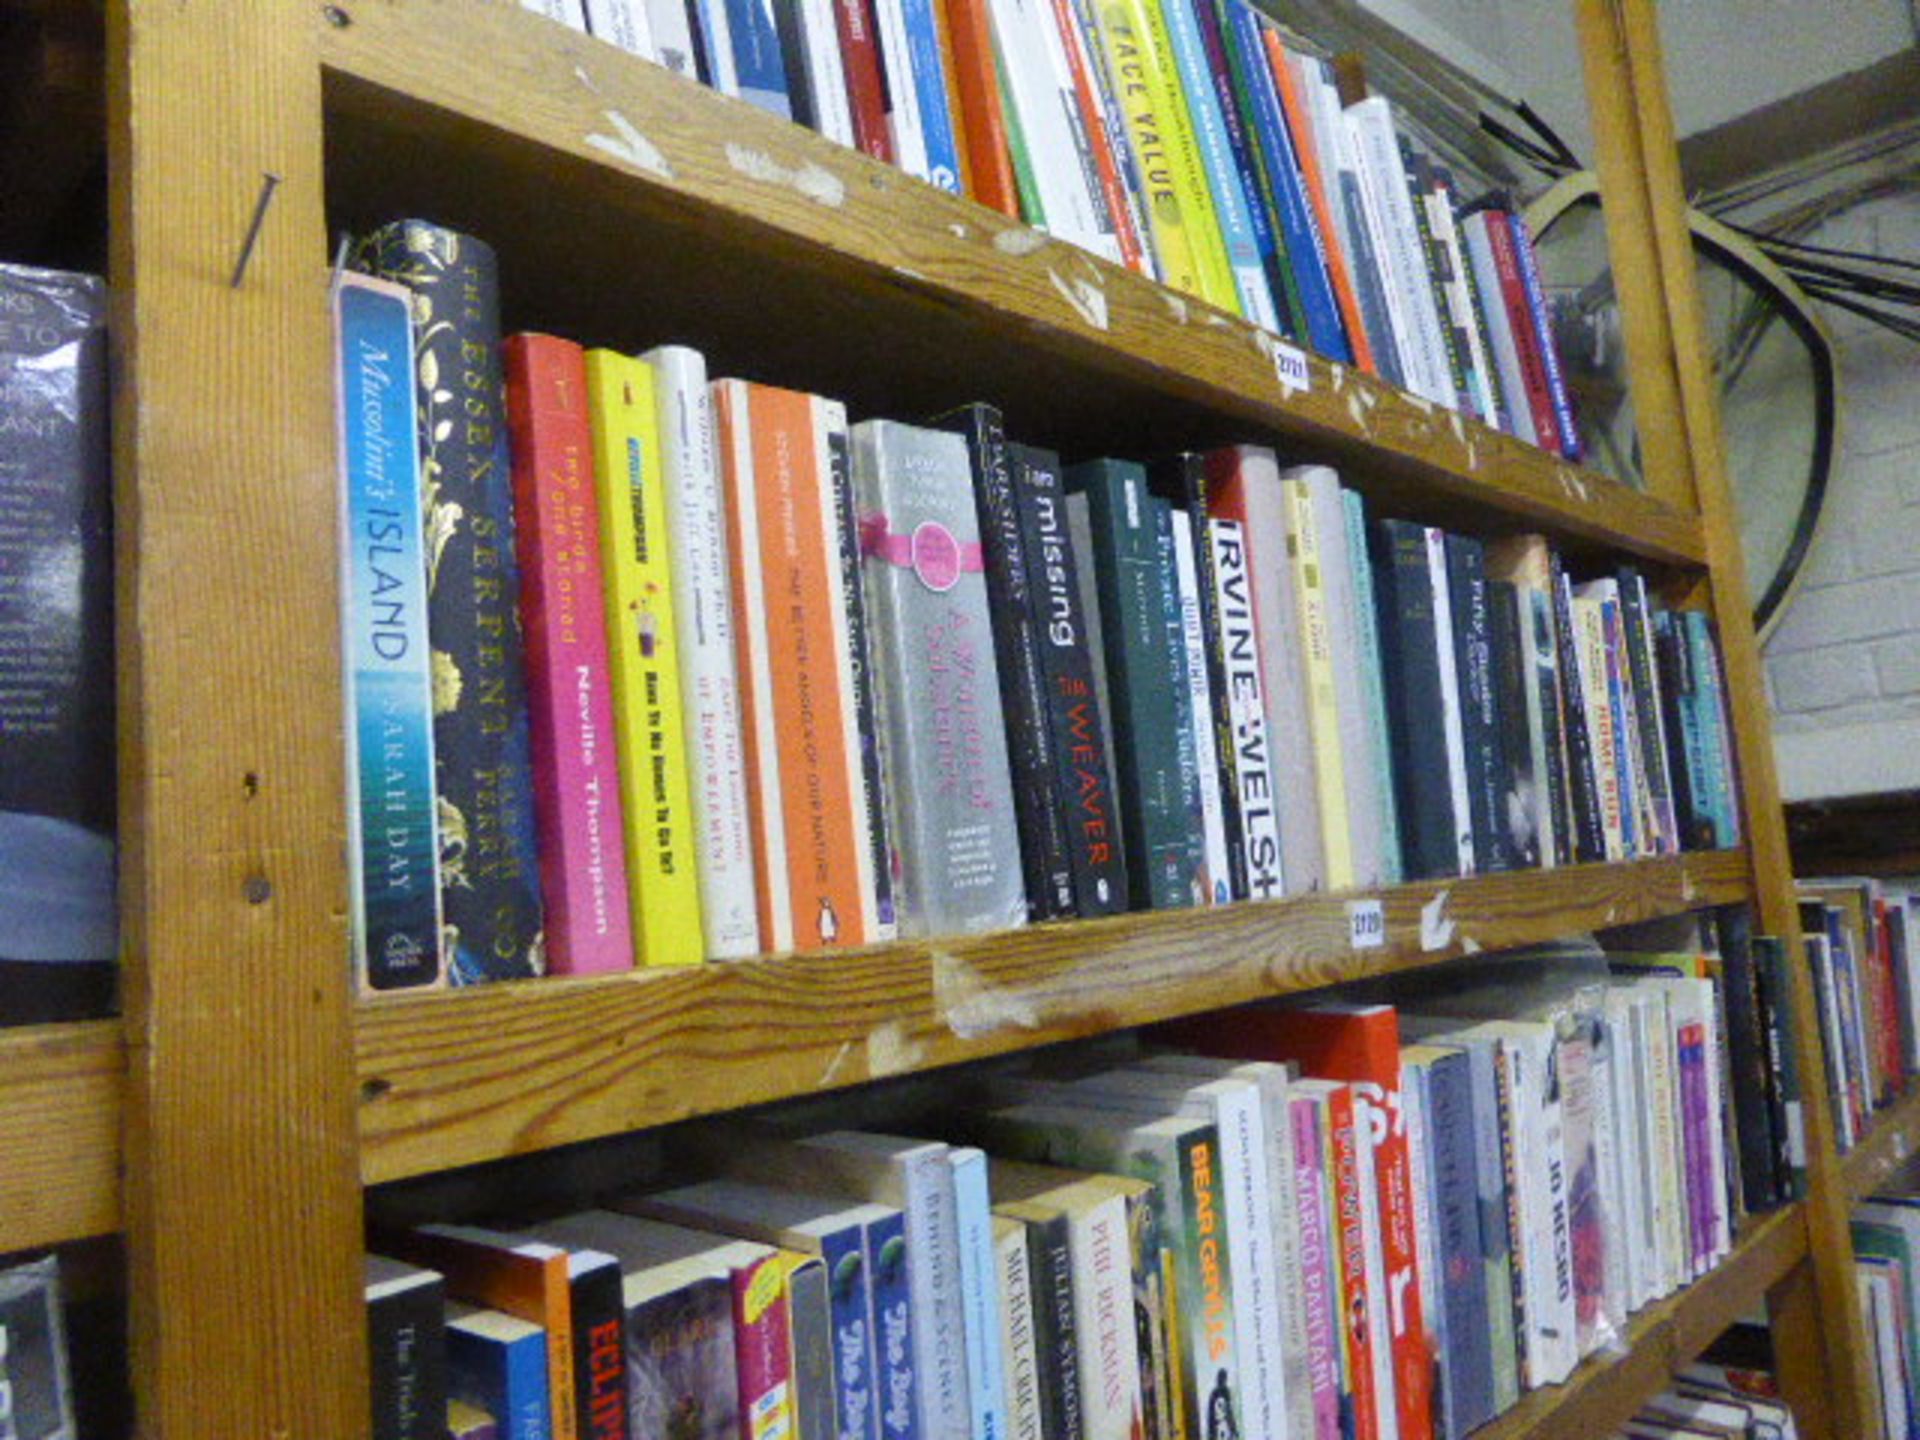 Shelf of fiction books